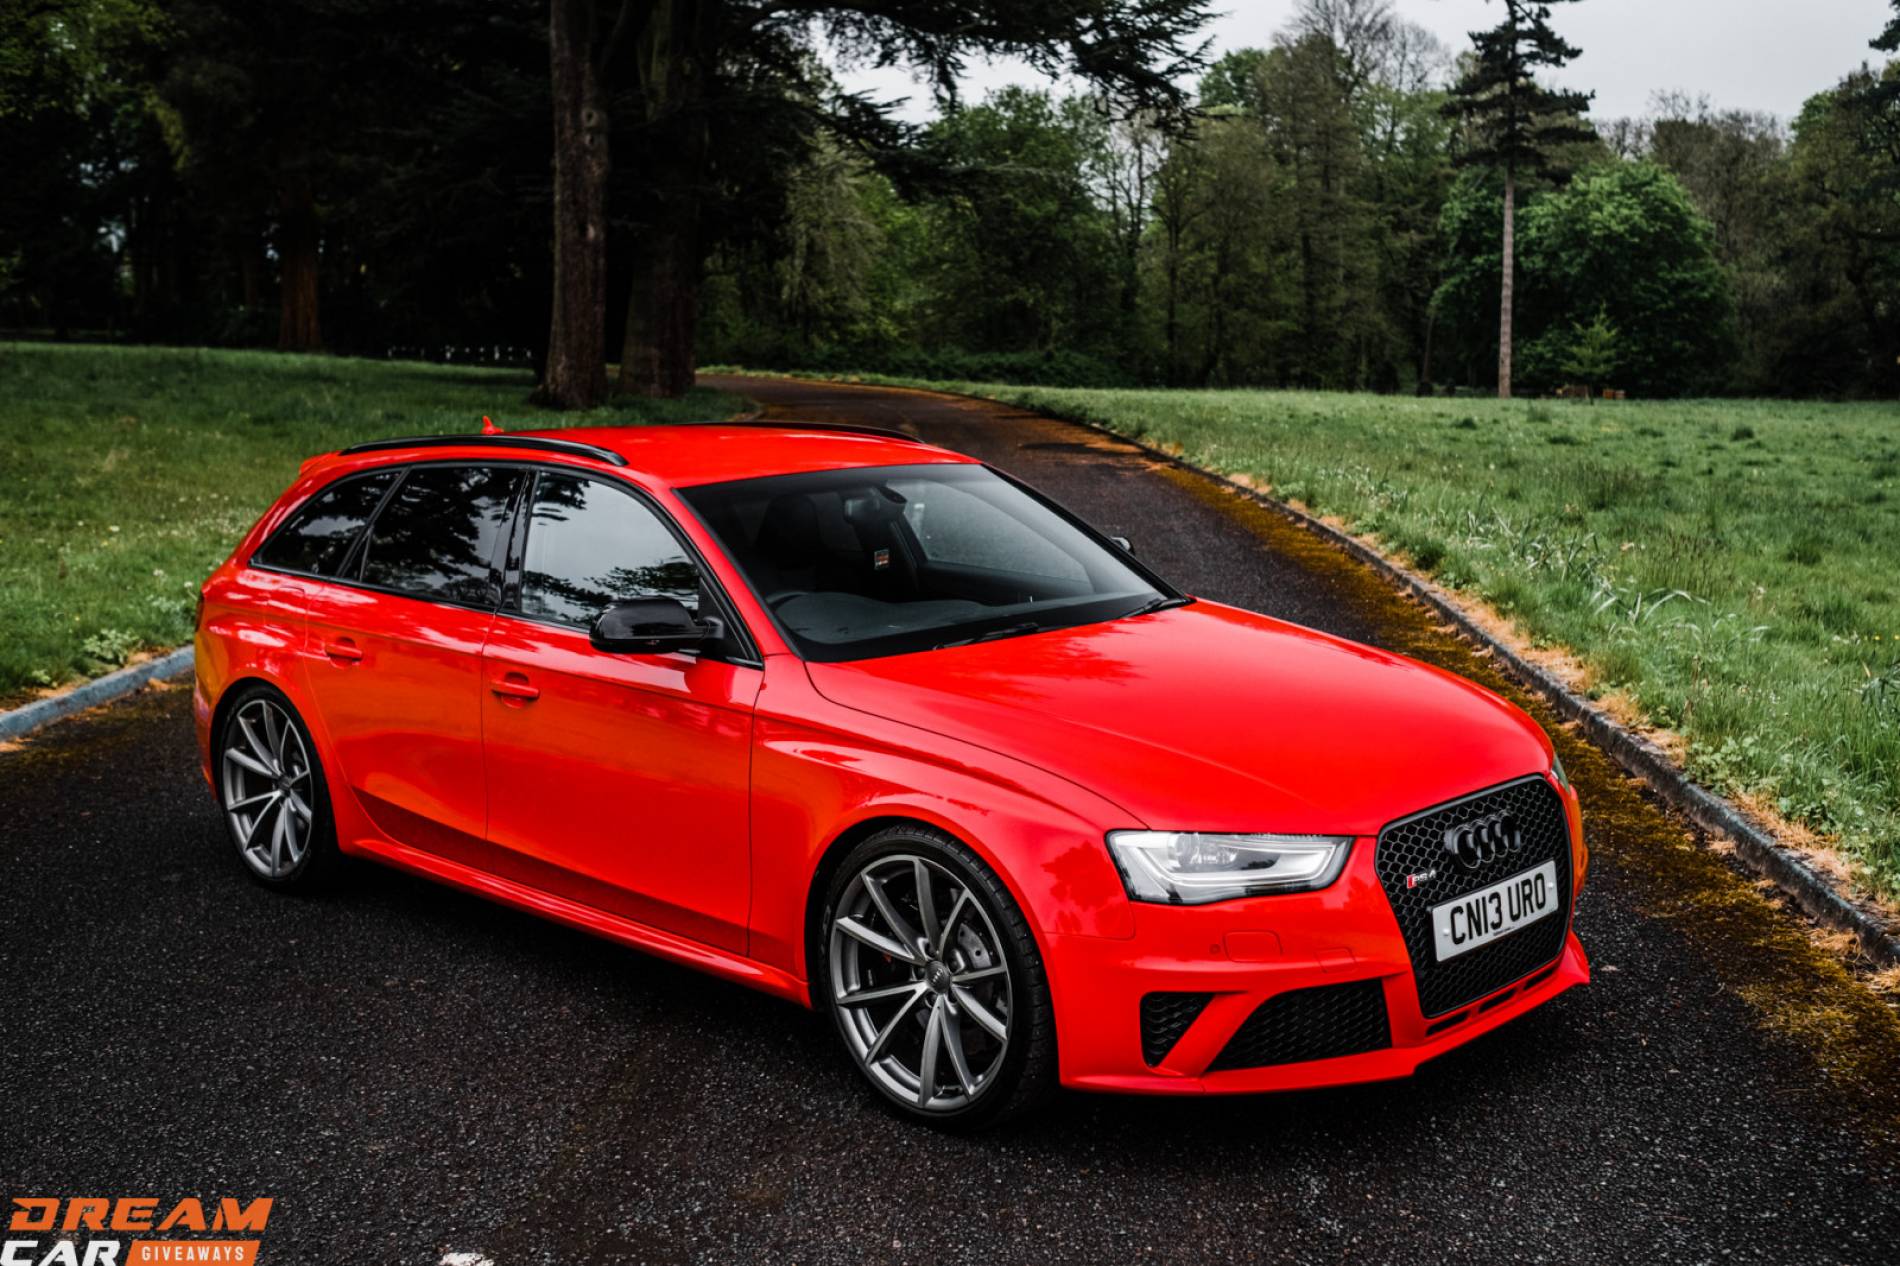 Audi RS4 Avant &amp; £2000 or £21,000 Cash Alternative